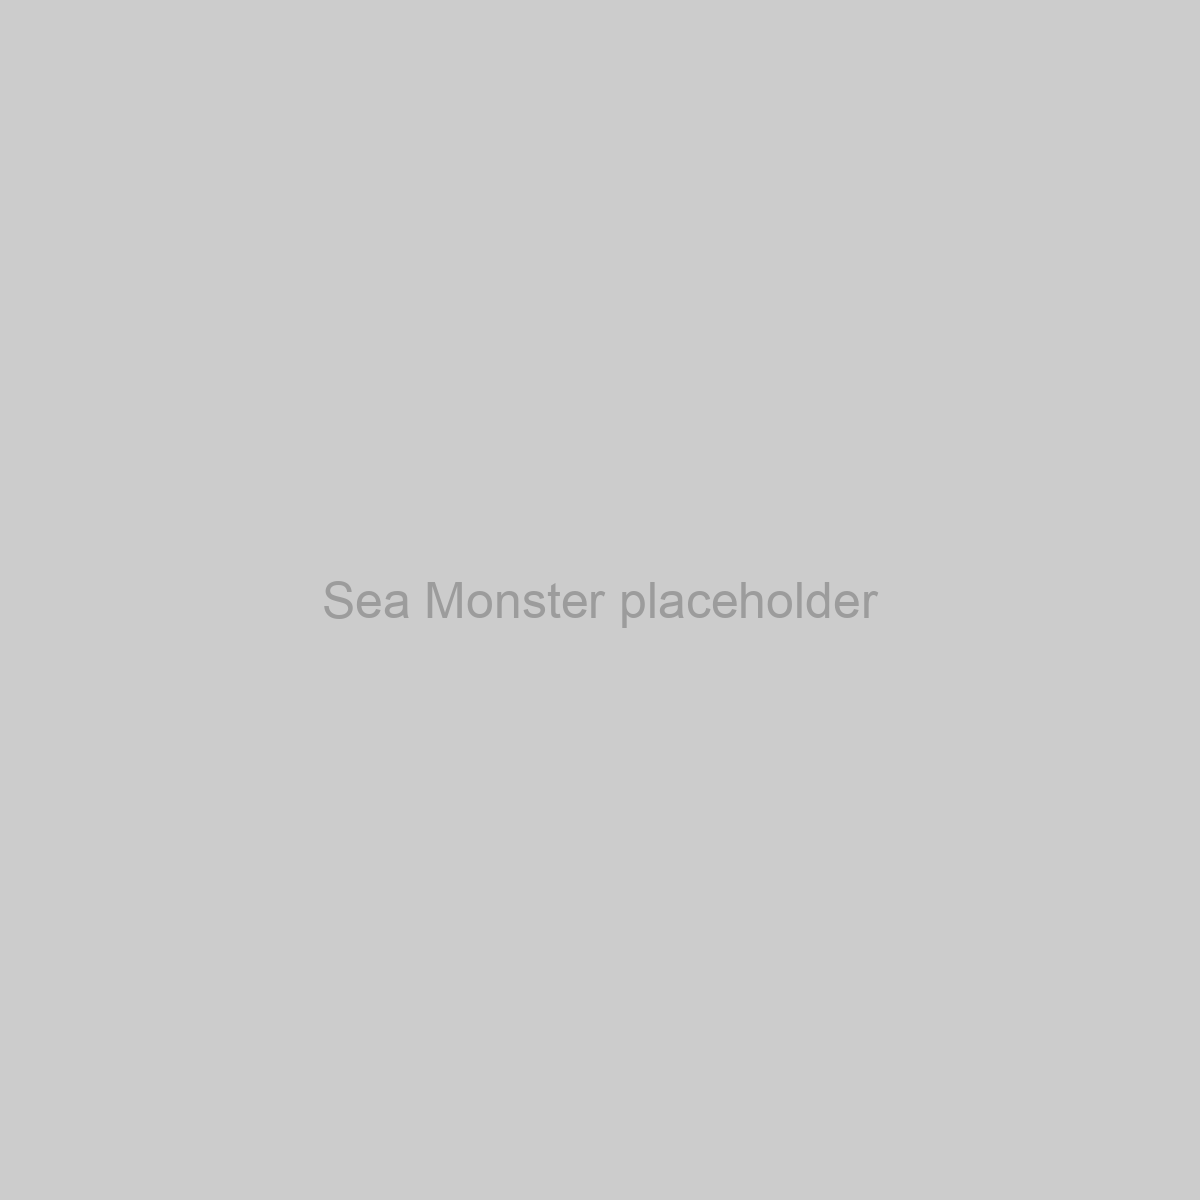 Sea Monster Placeholder Image